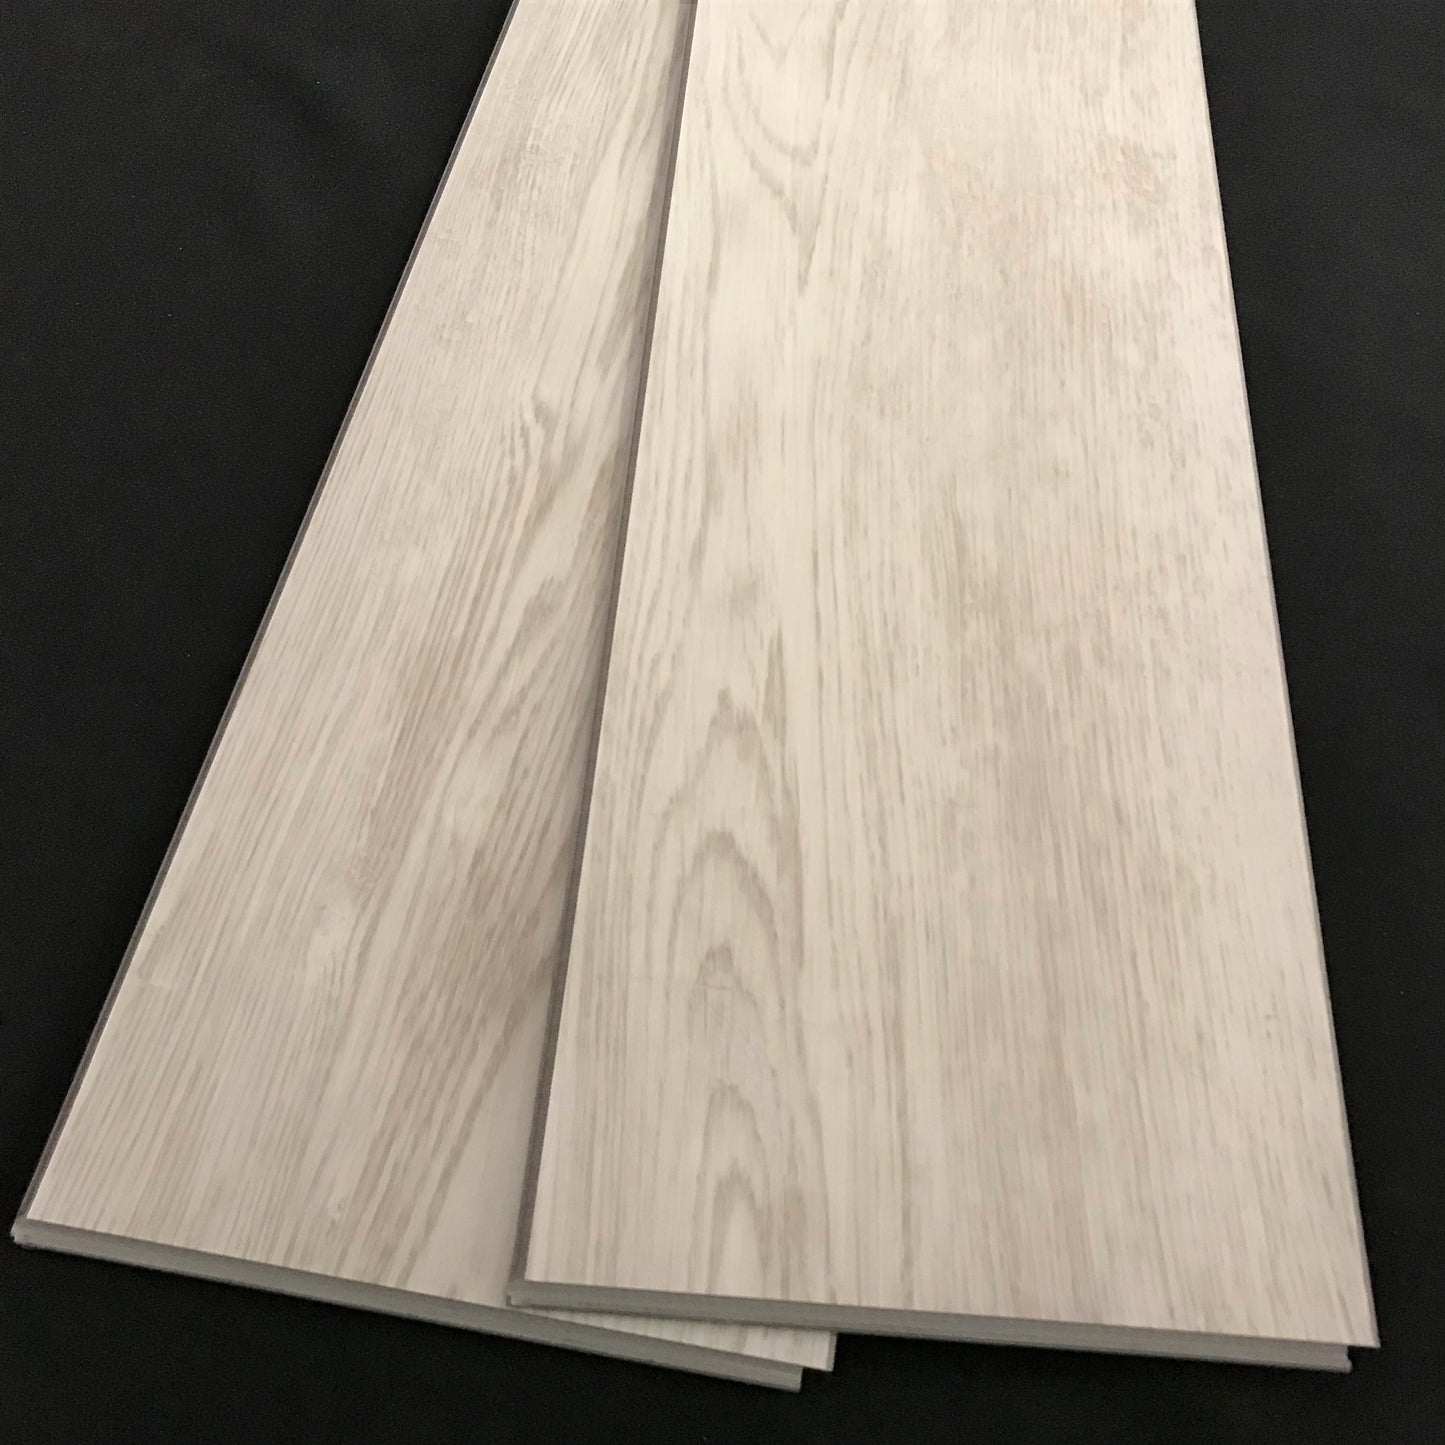 White Oak Vinyl Planks (pad attached) $2.99/sf 23.64 sf/box